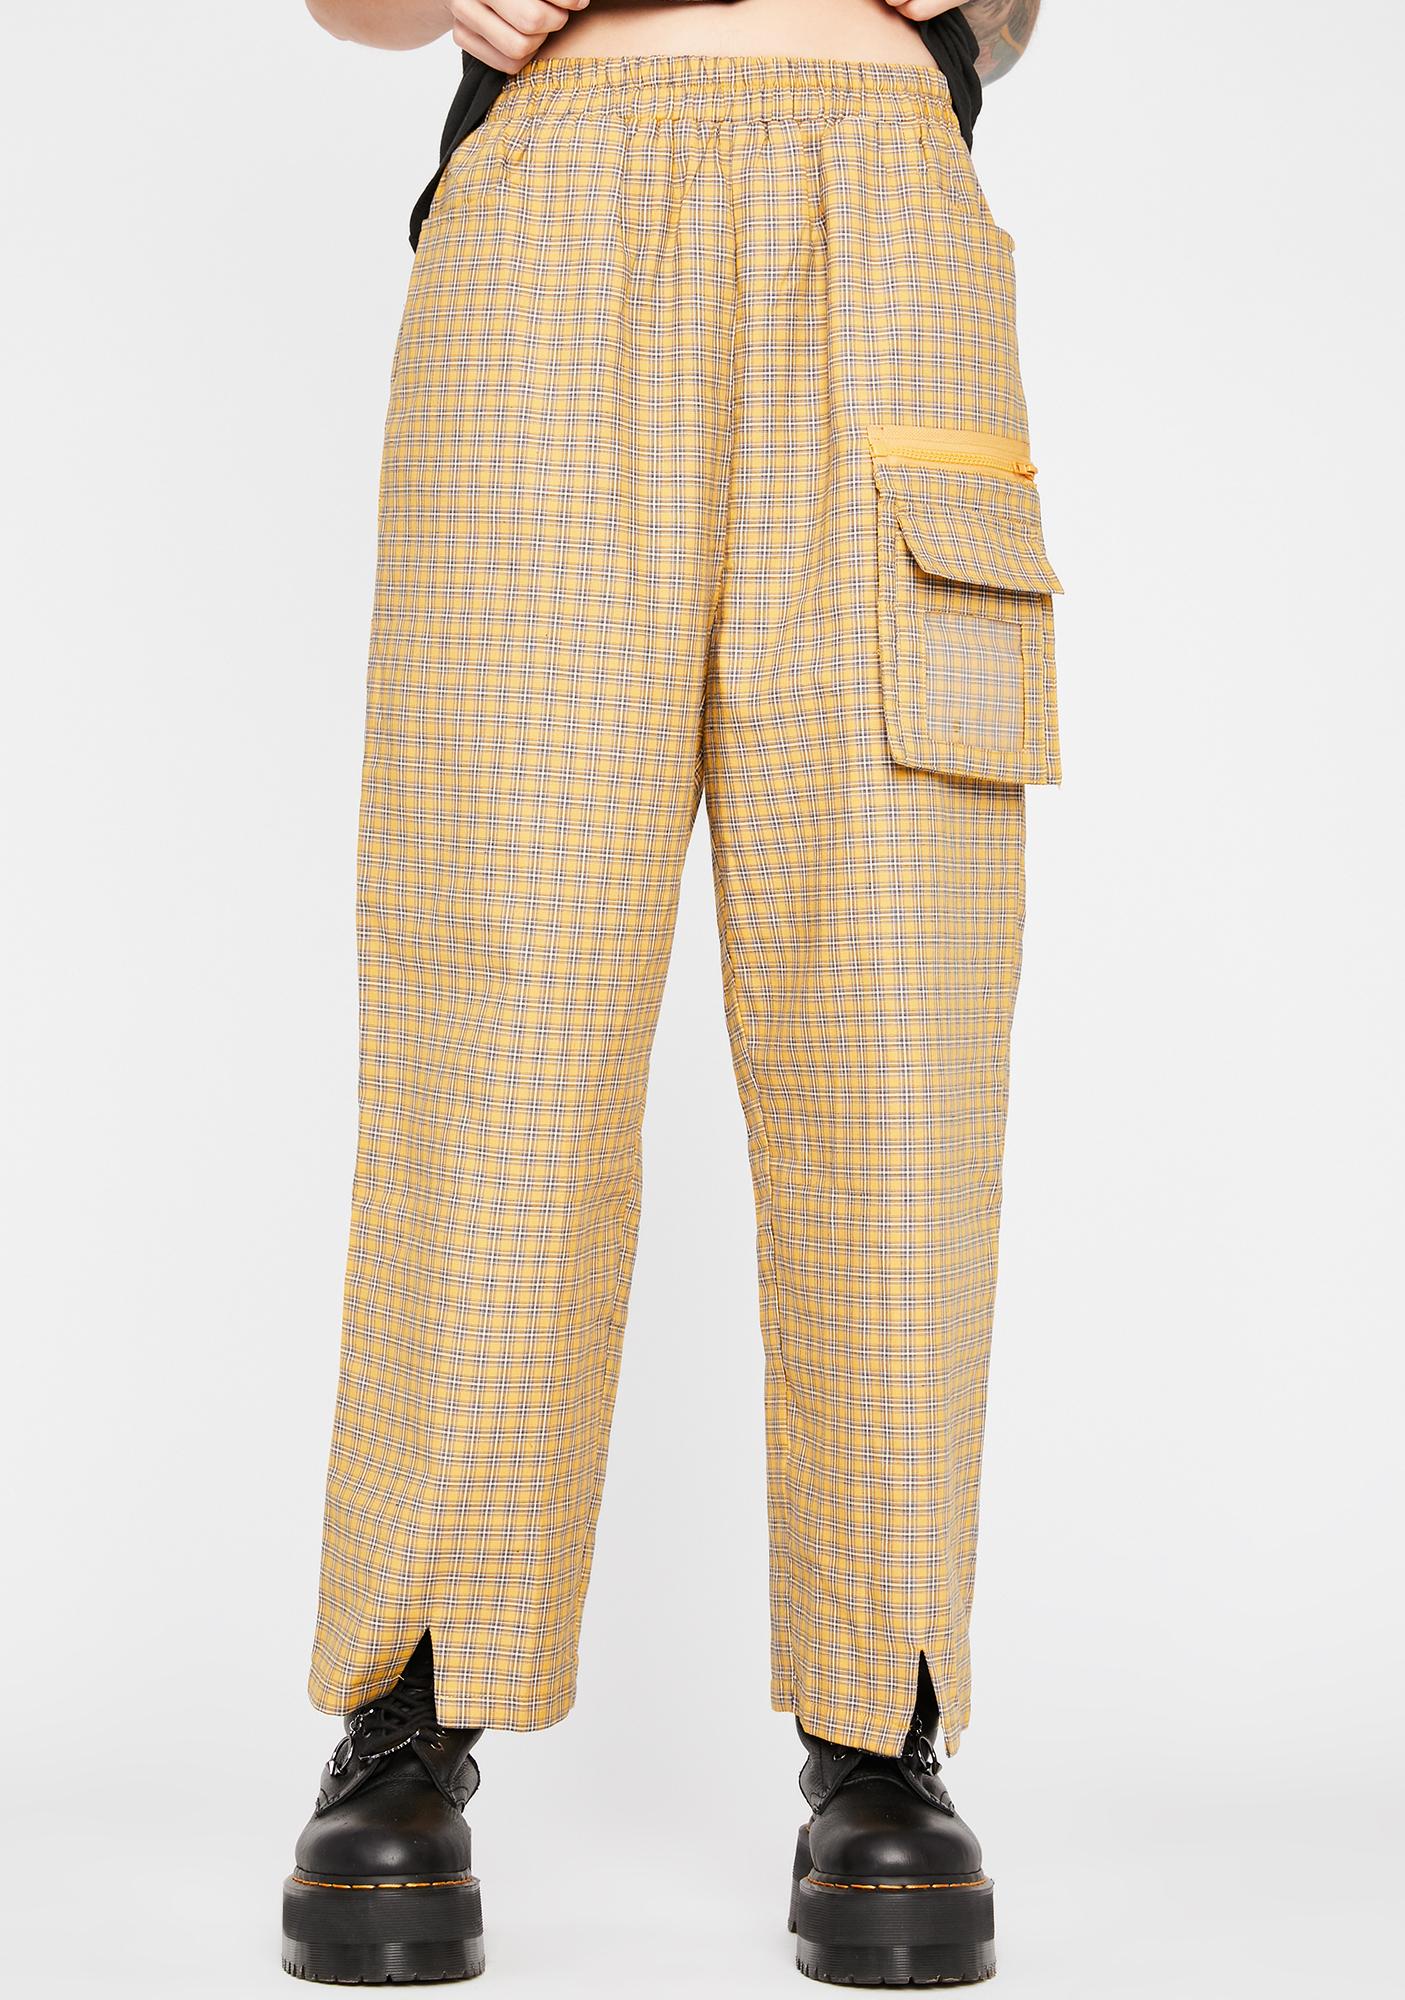 mustard yellow plaid pants